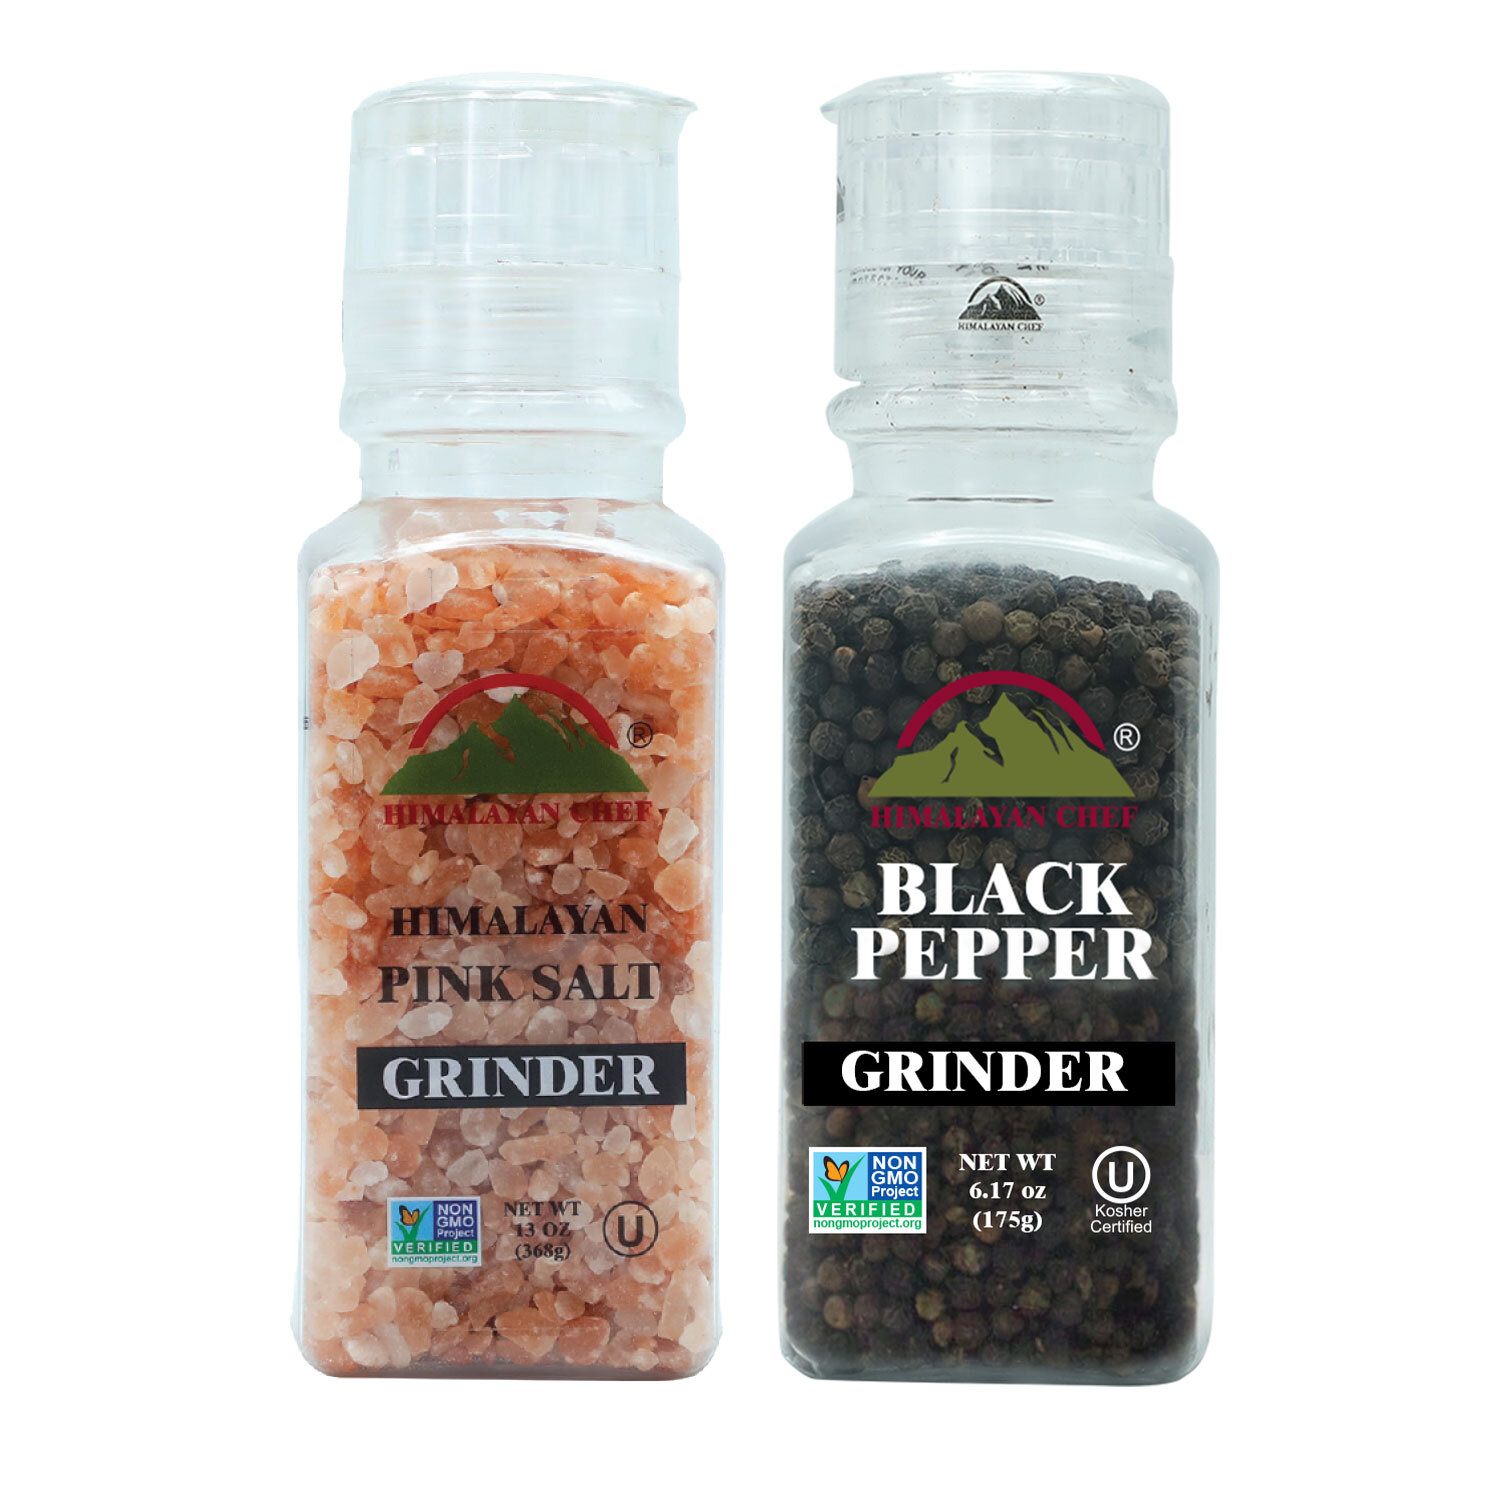 Hotder Premium Pepper Salt Pepper Grinder Set of 2-Refillable Coarseness Adjustable Pepper Mill Shaker with Glass Body Christmas Gift( Two Pack)